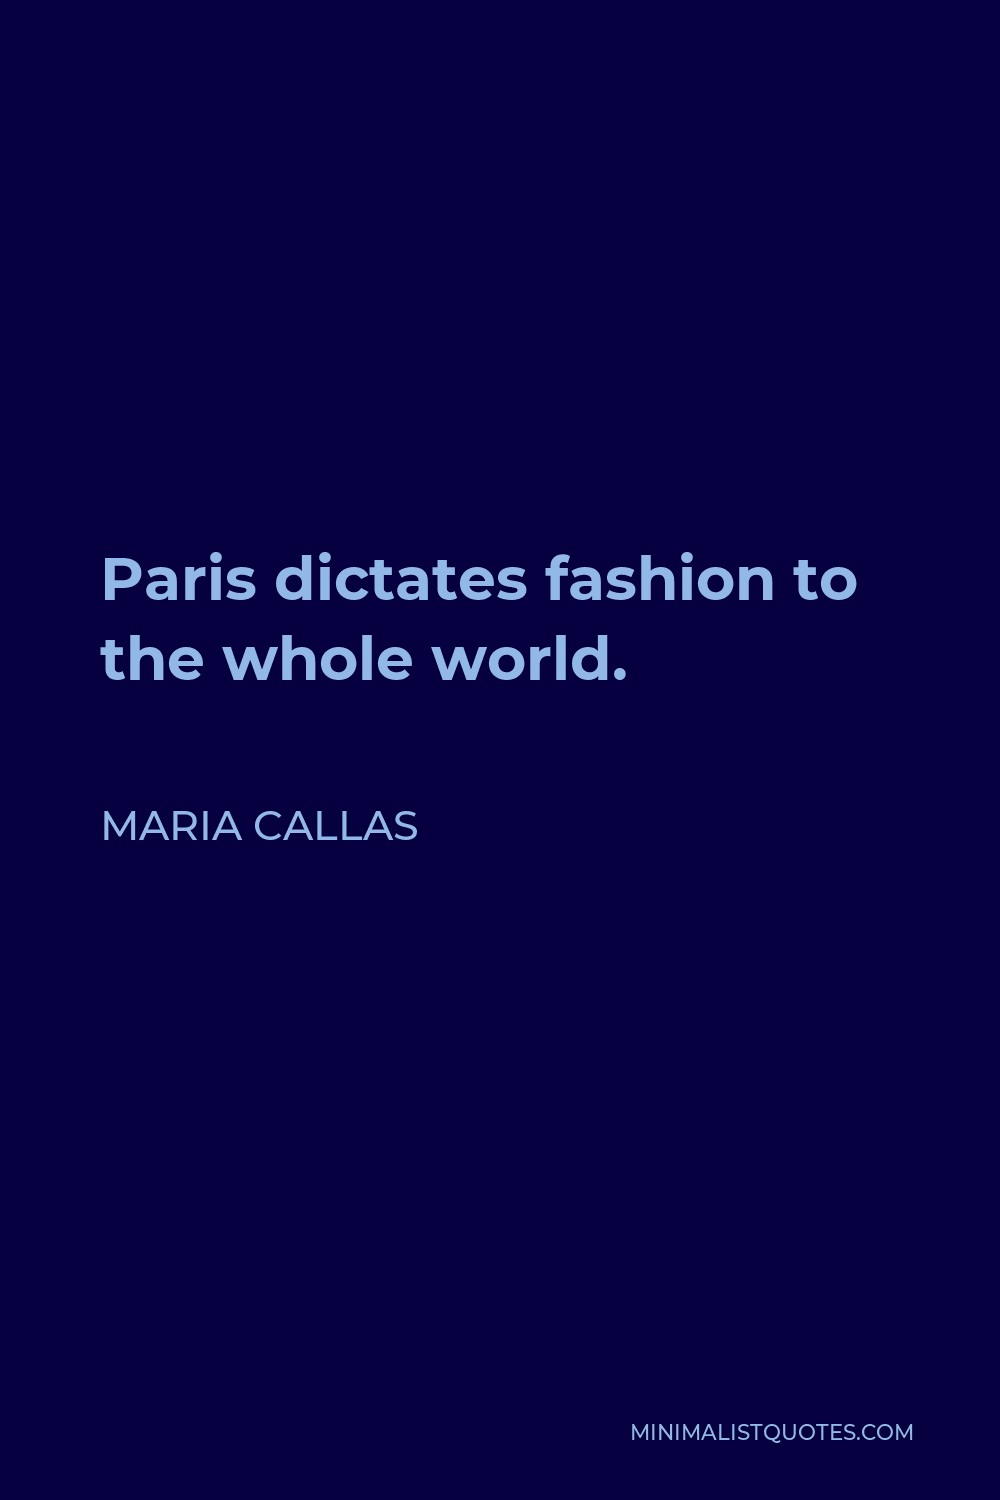 Maria Callas Quote - Paris dictates fashion to the whole world.